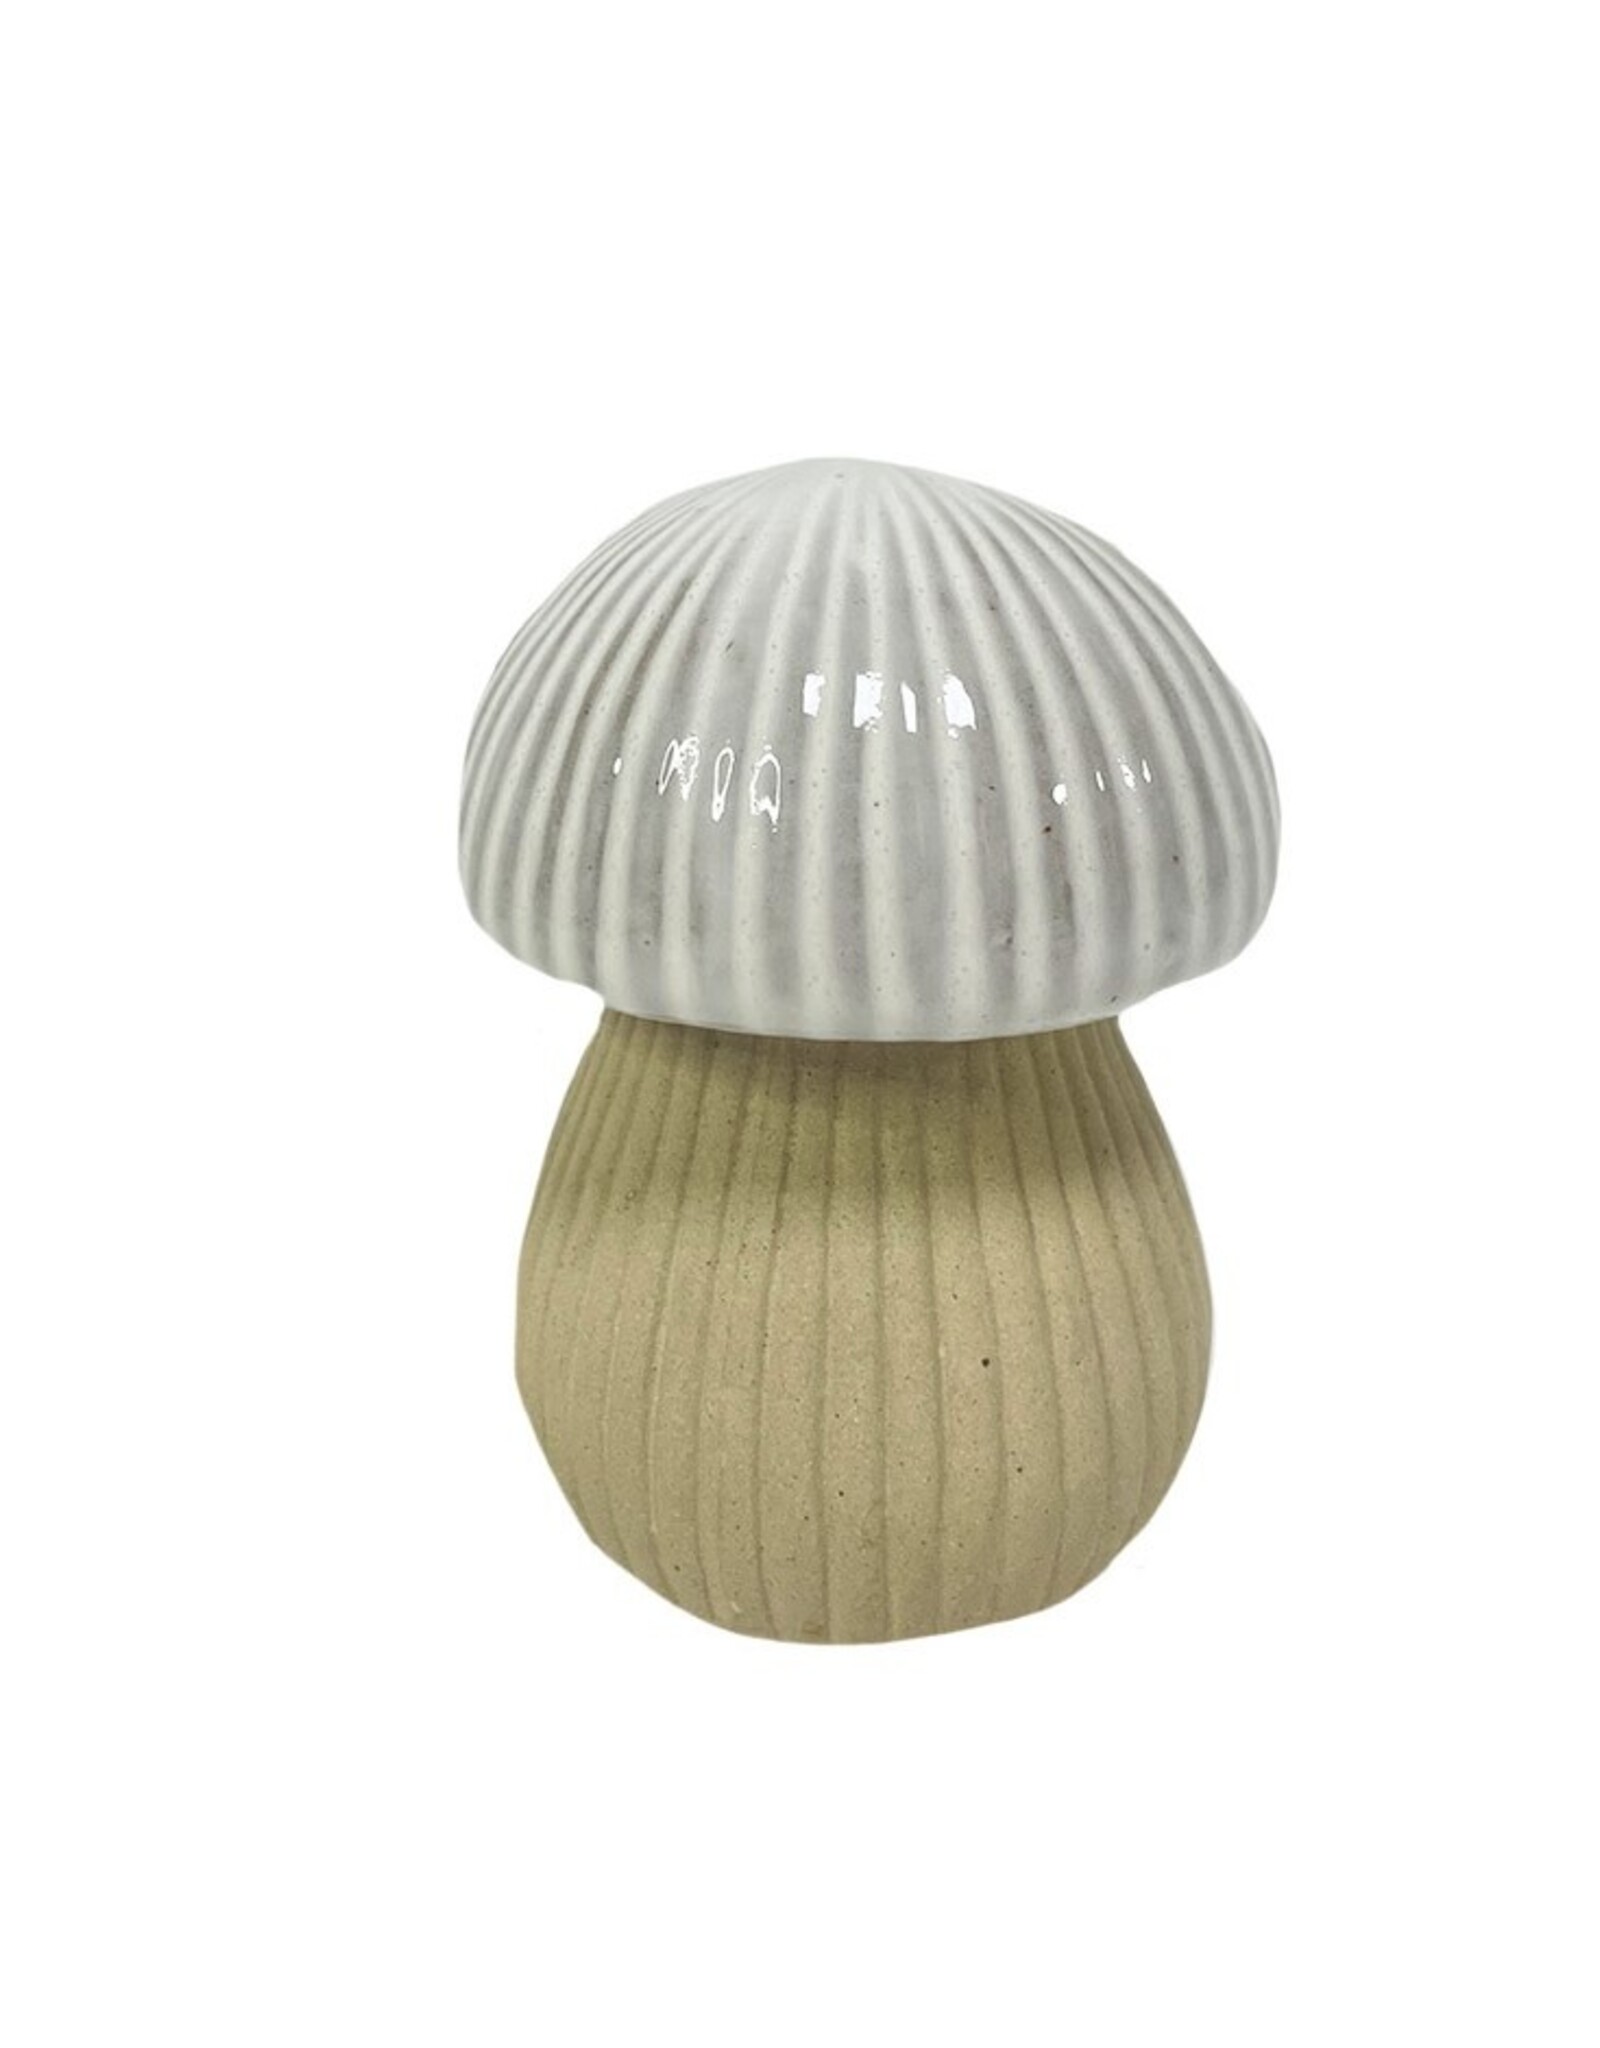 Koppers Ceramic & Wooden Mushroom